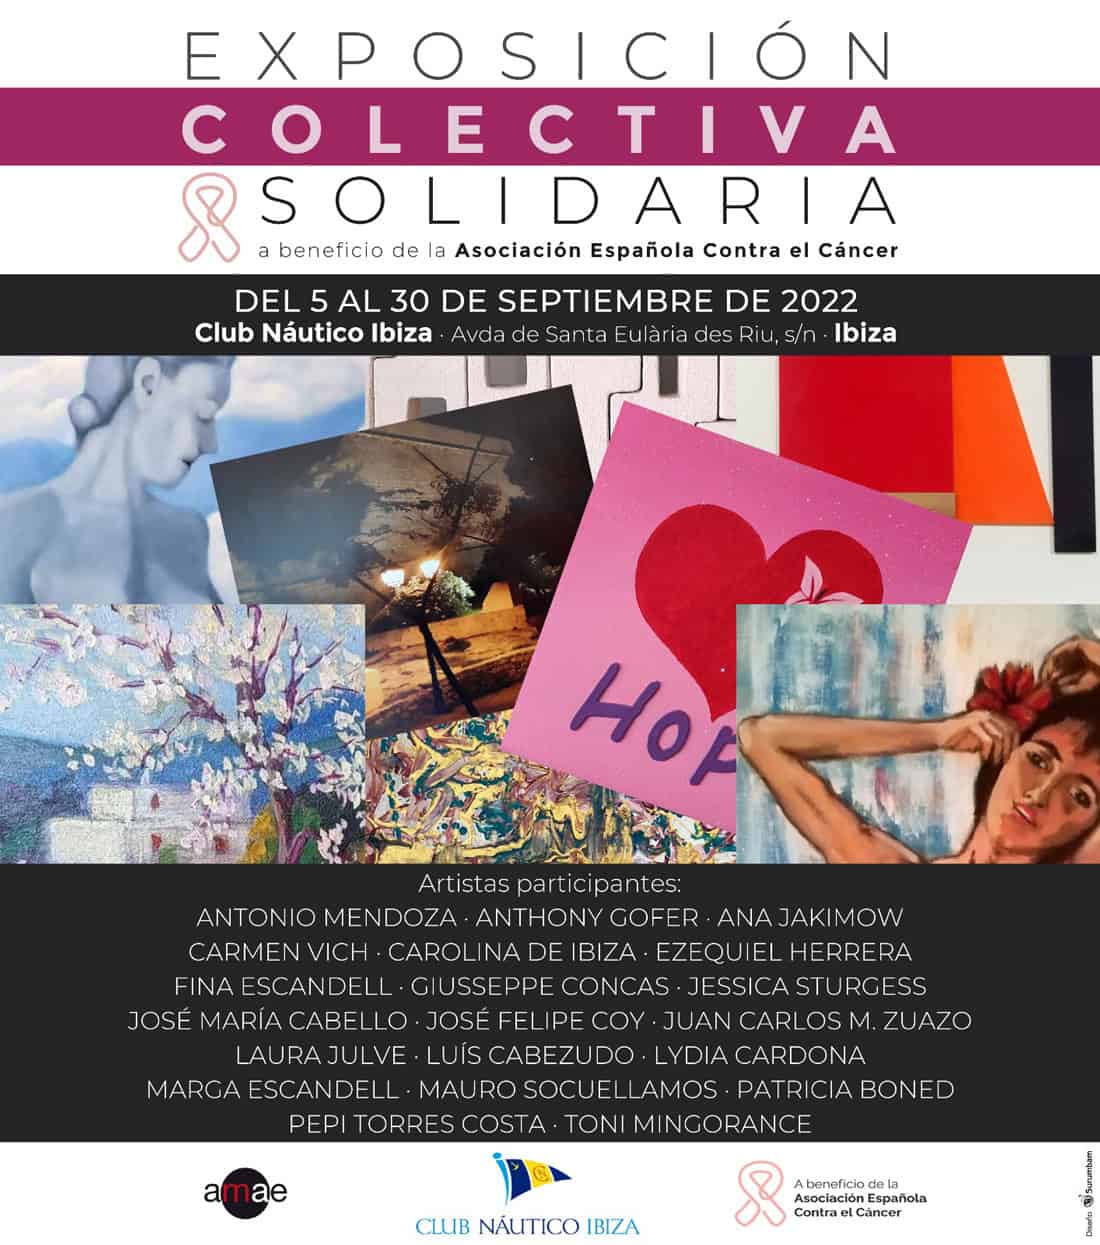 solidarity-collective-exhibition-amae-club-nautico-ibiza-2022-welcometoibiza